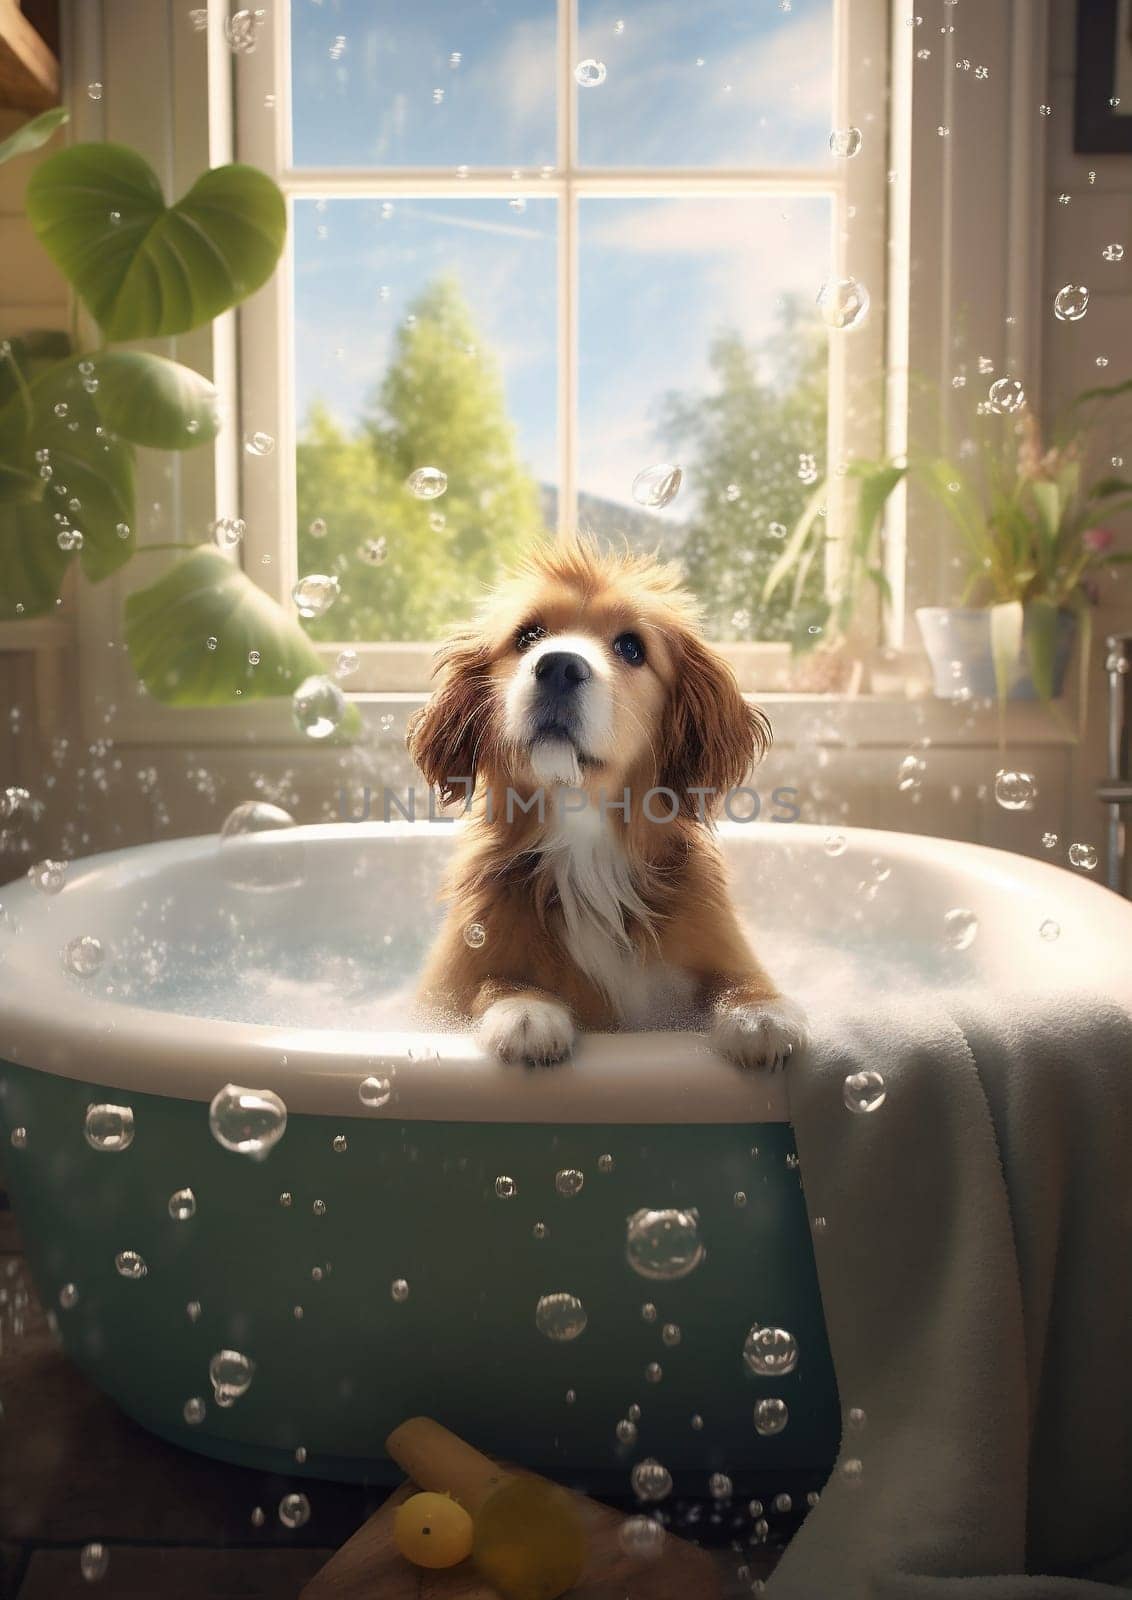 Dog pet bathing water shower bathroom cute soap clean animal hygiene wet shampoo by Vichizh